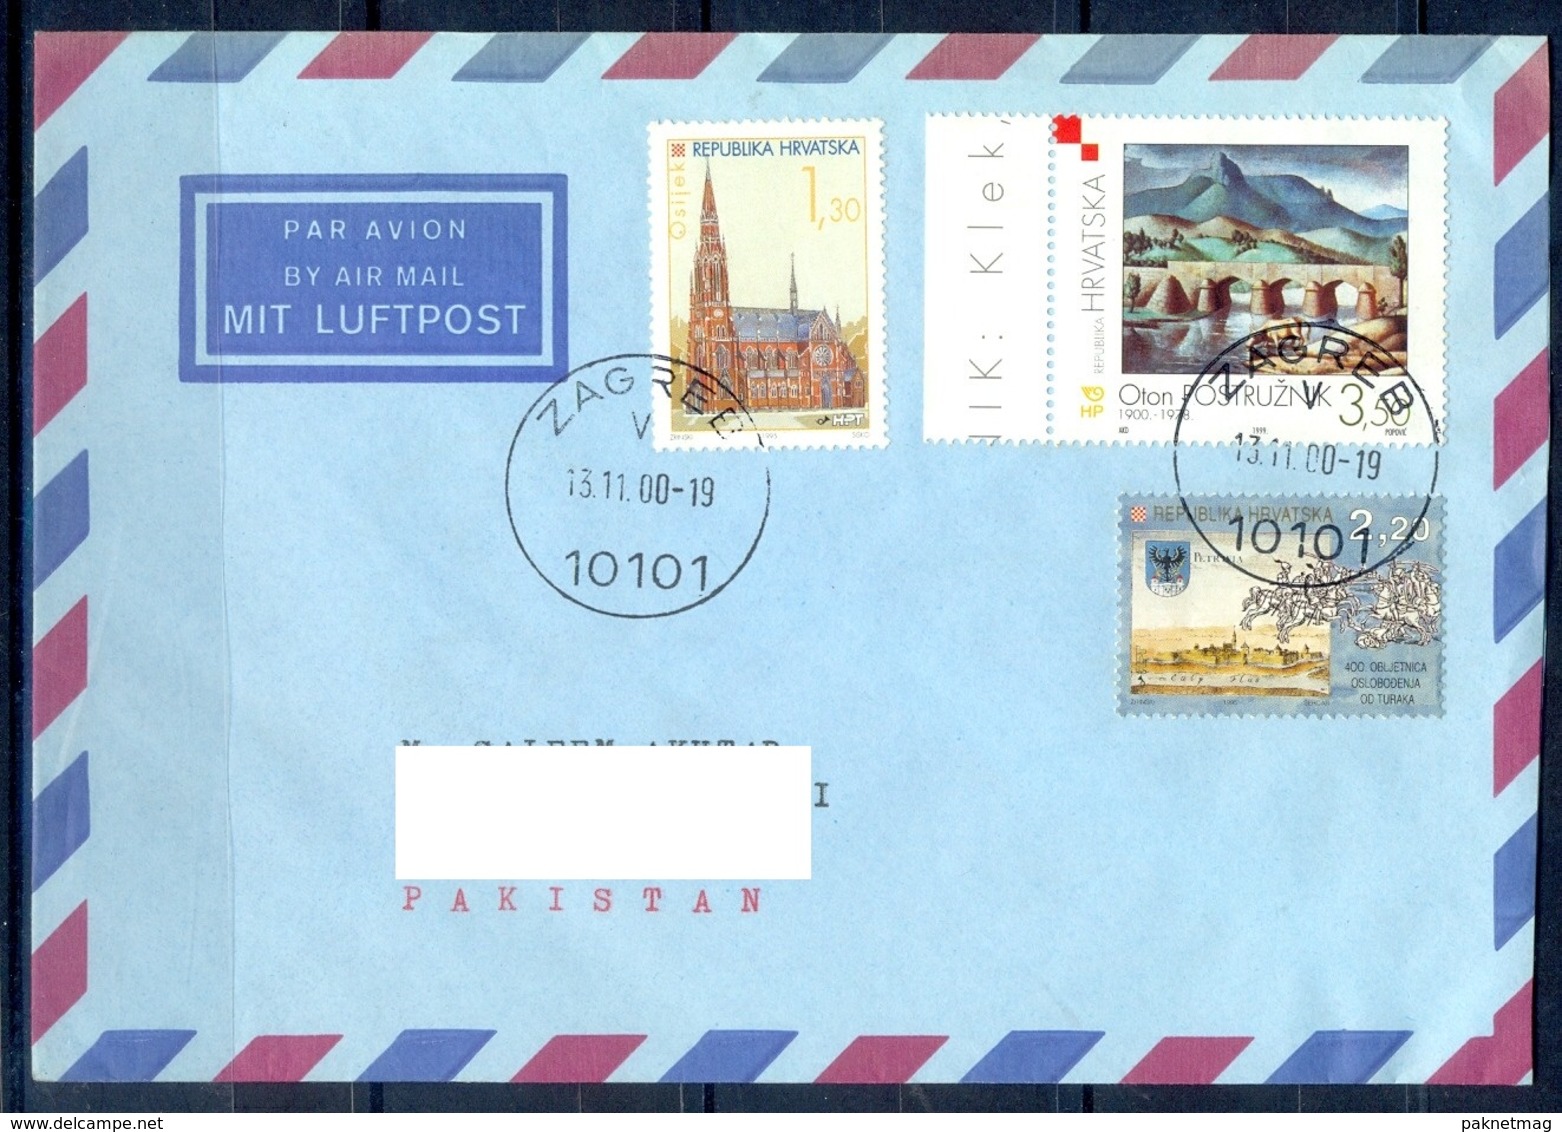 K292- Postal Used Cover. Posted From Croatia To Pakistan. - Croatia